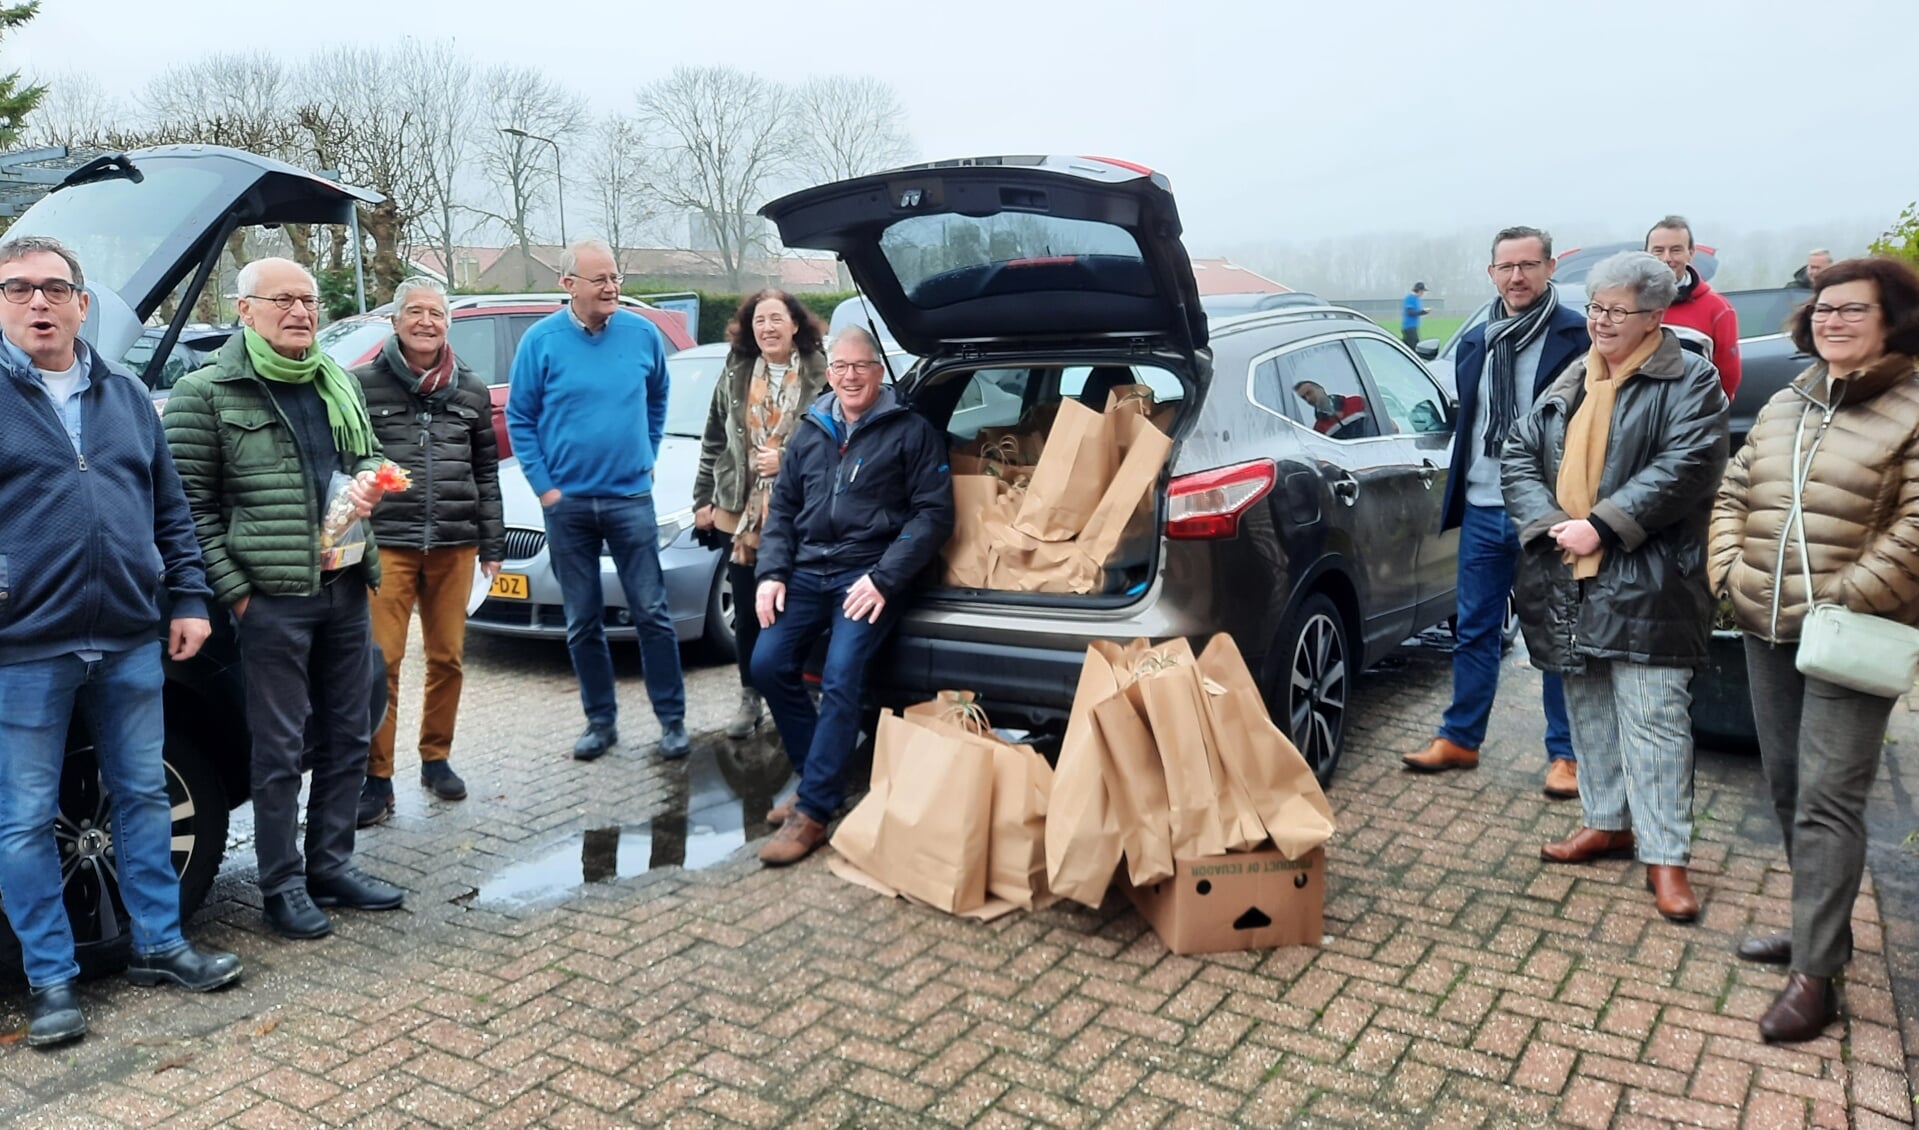 Lions bezorgen record aantal Sint pakjes in Halderberge